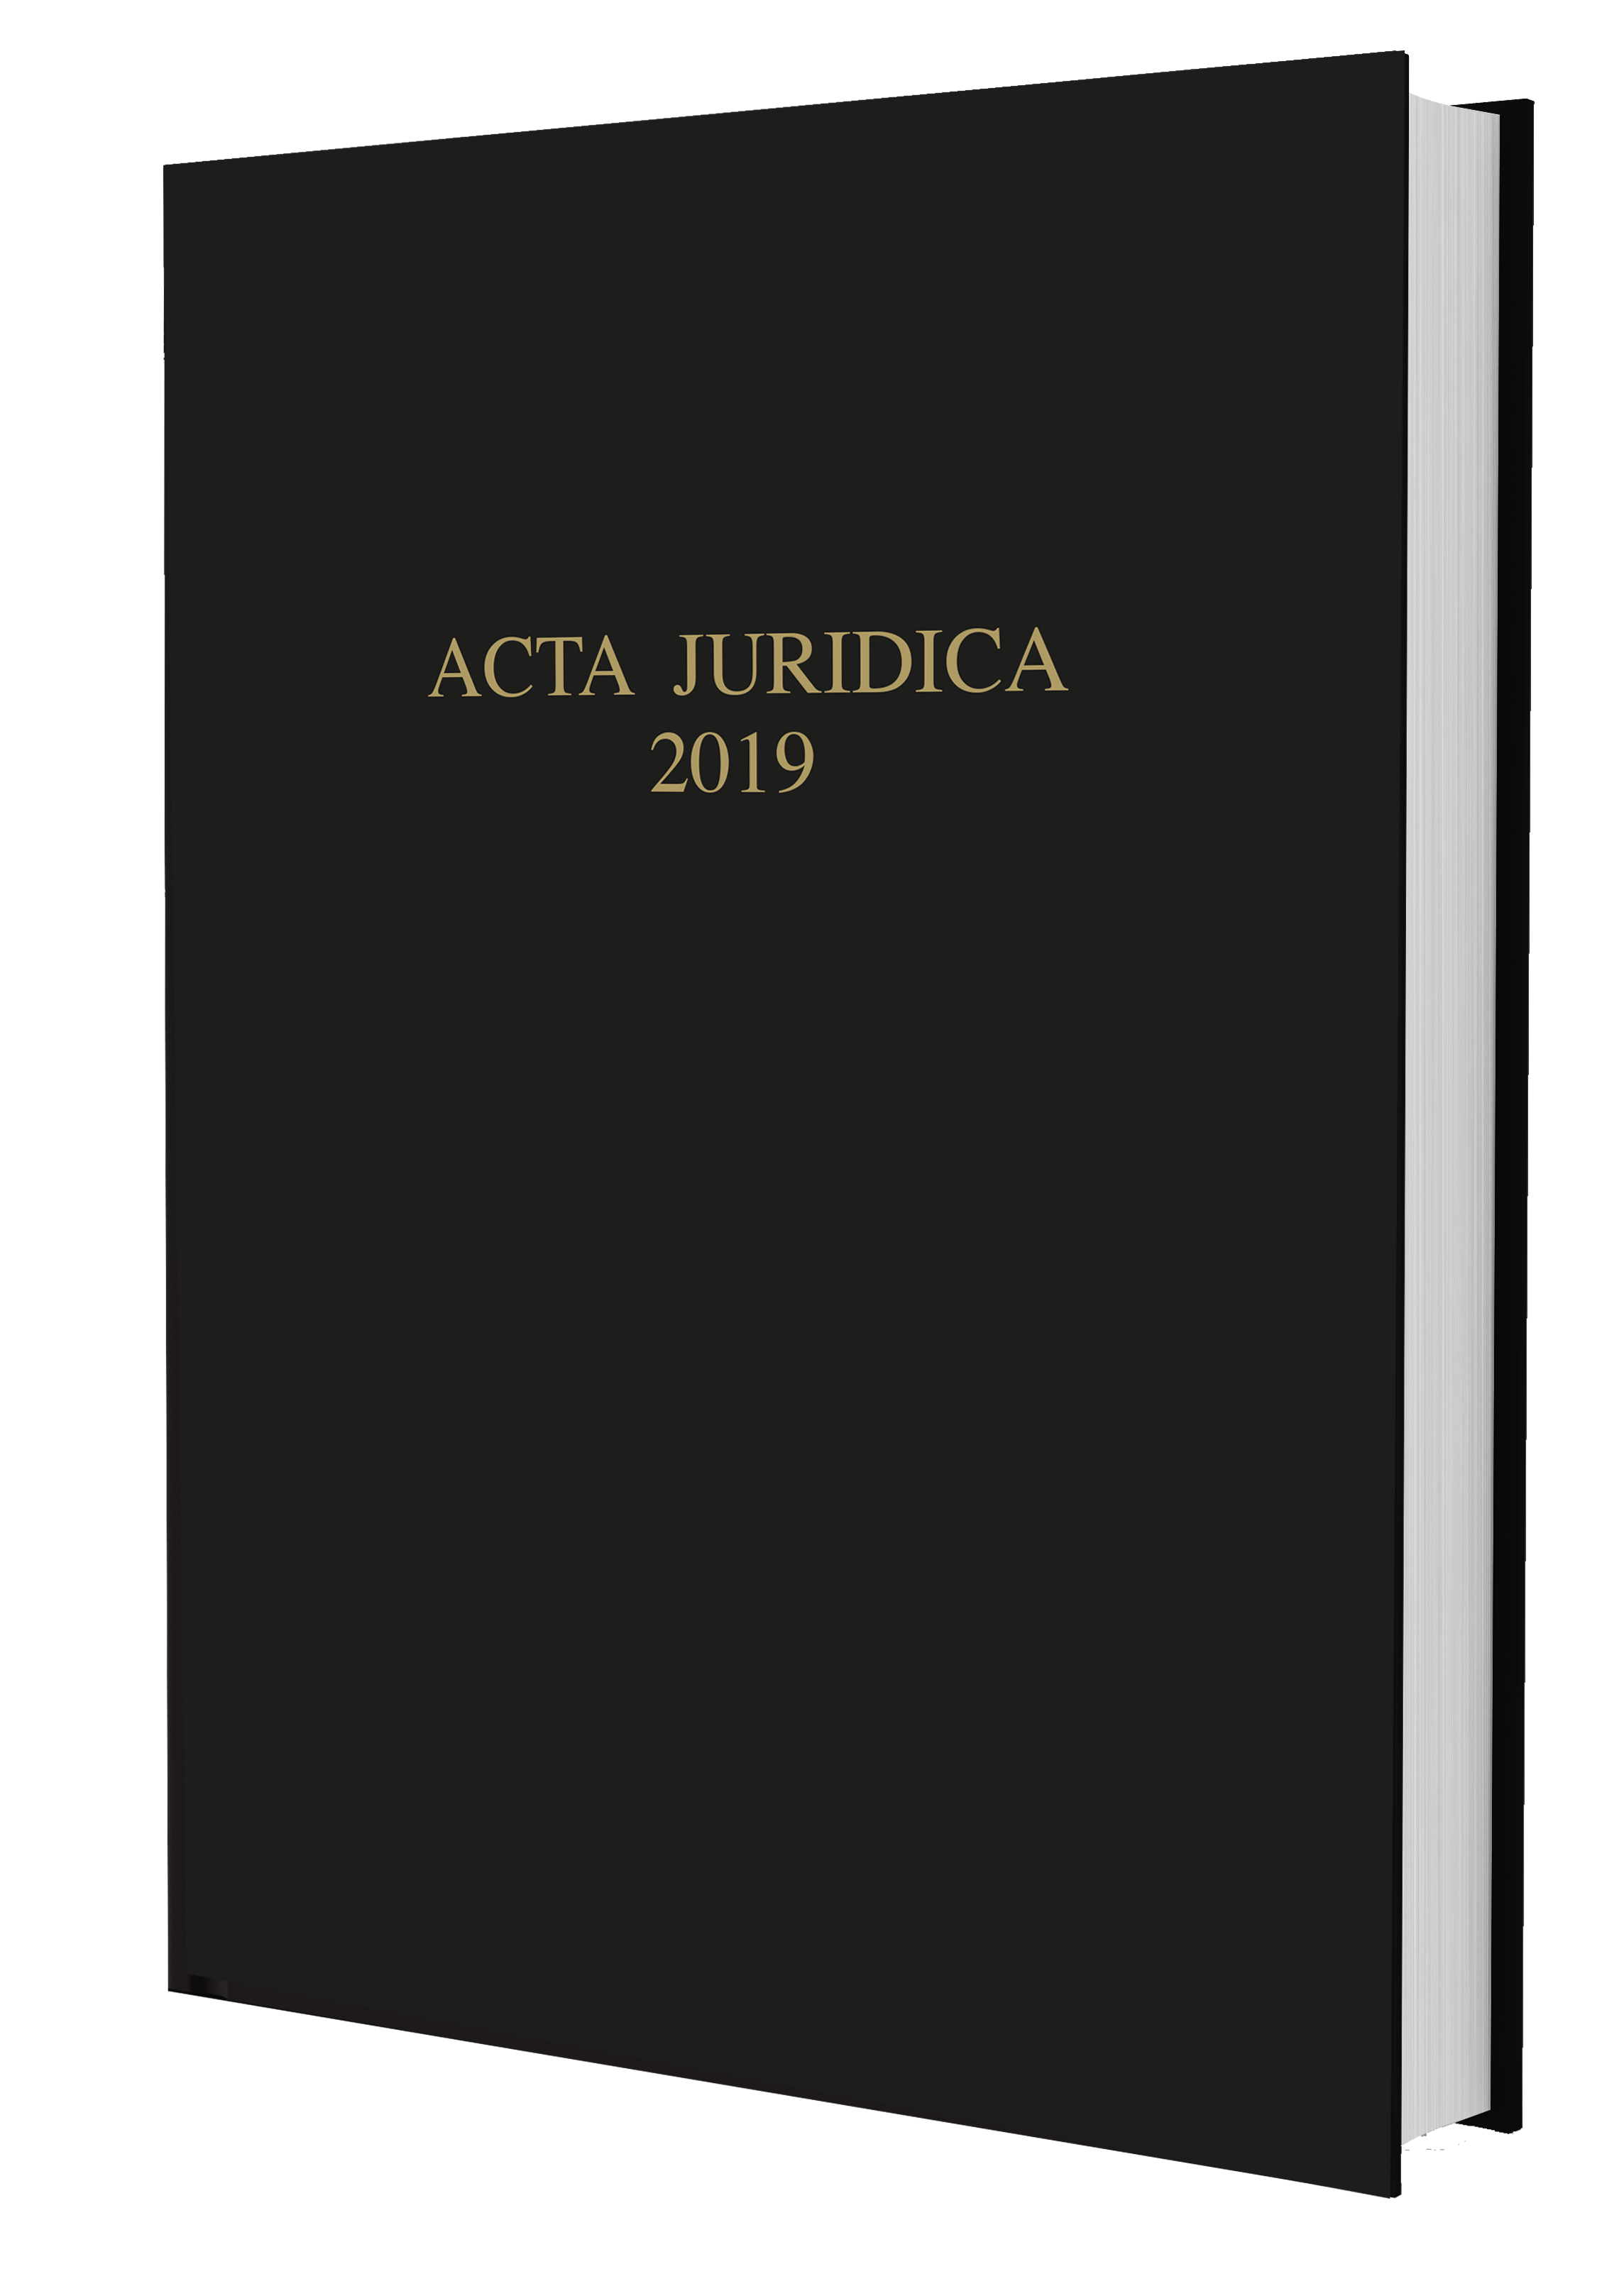 Acta Juridica 2019